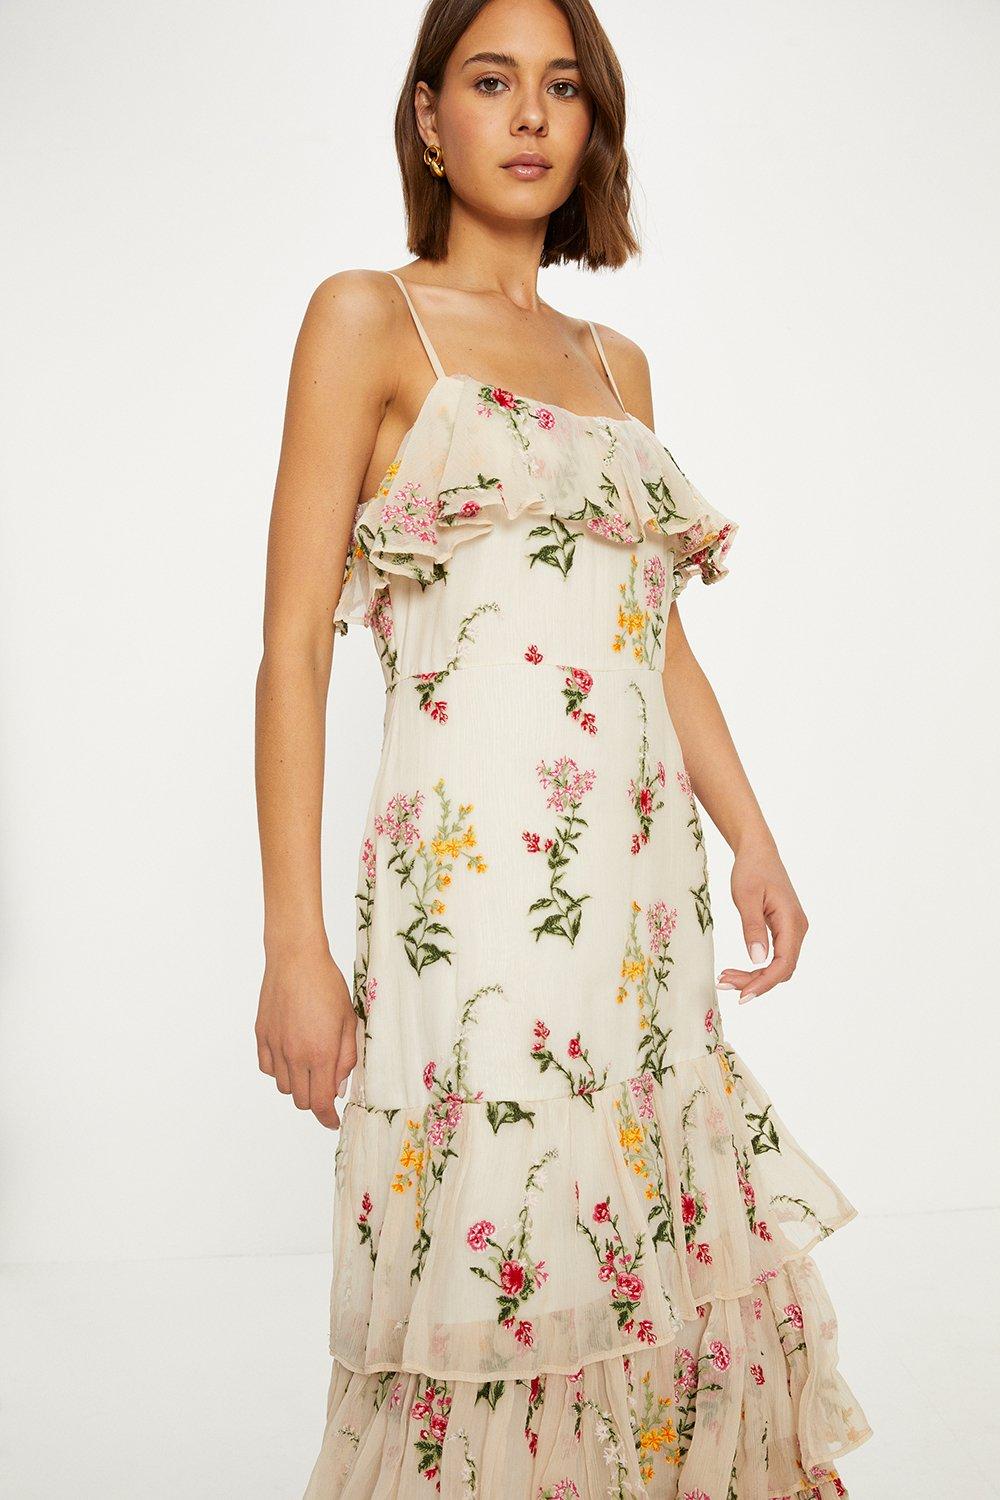 Suno Flared Floral Dress, $405, farfetch.com